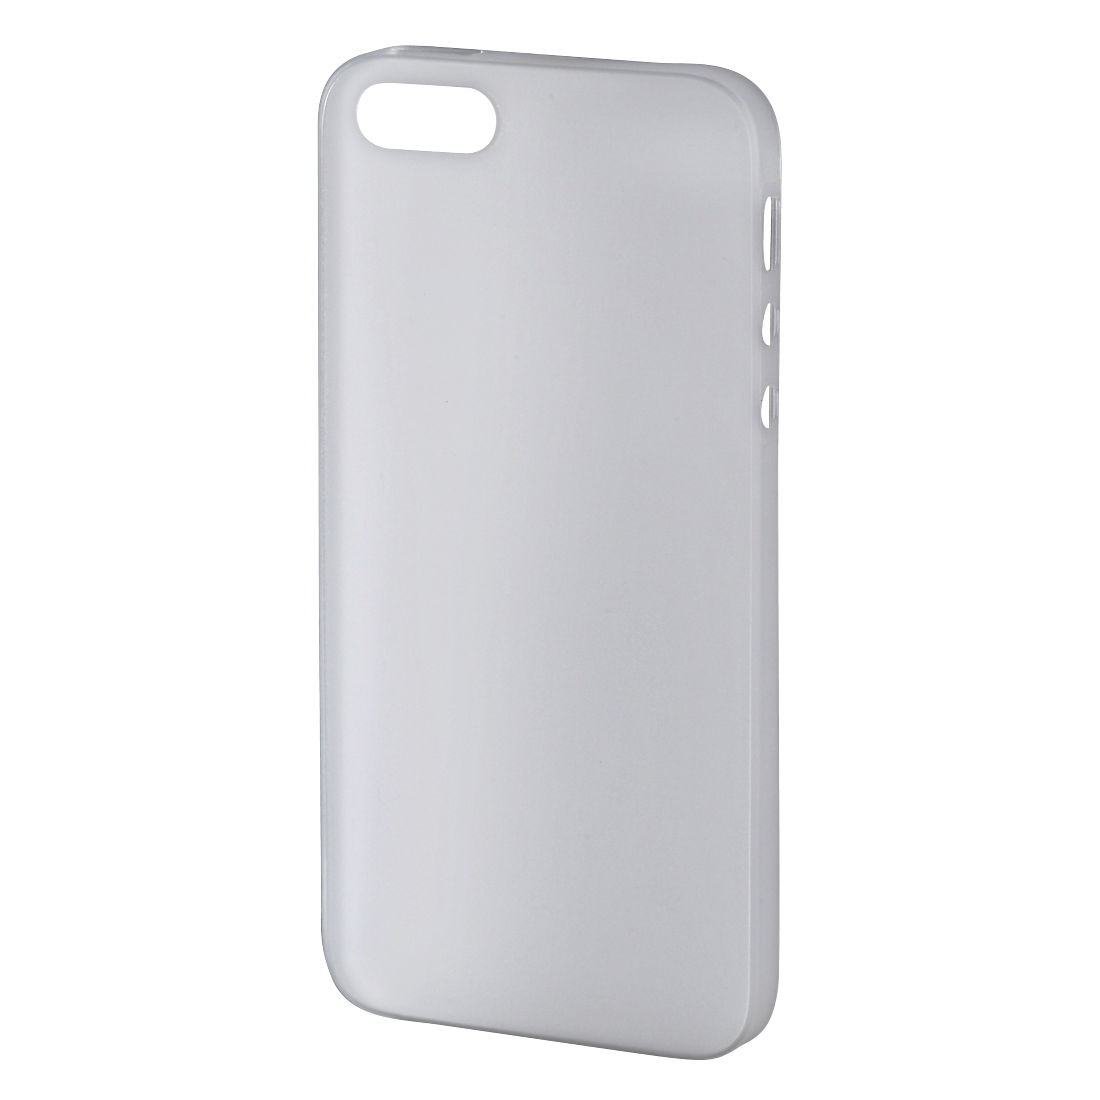 Клип кейс apple для iphone. Iphone 6 Plus чехол белый. Чехол клип-кейс. Чехол клип кейс пластмассовый. Transparent Plastic Case iphone 5.